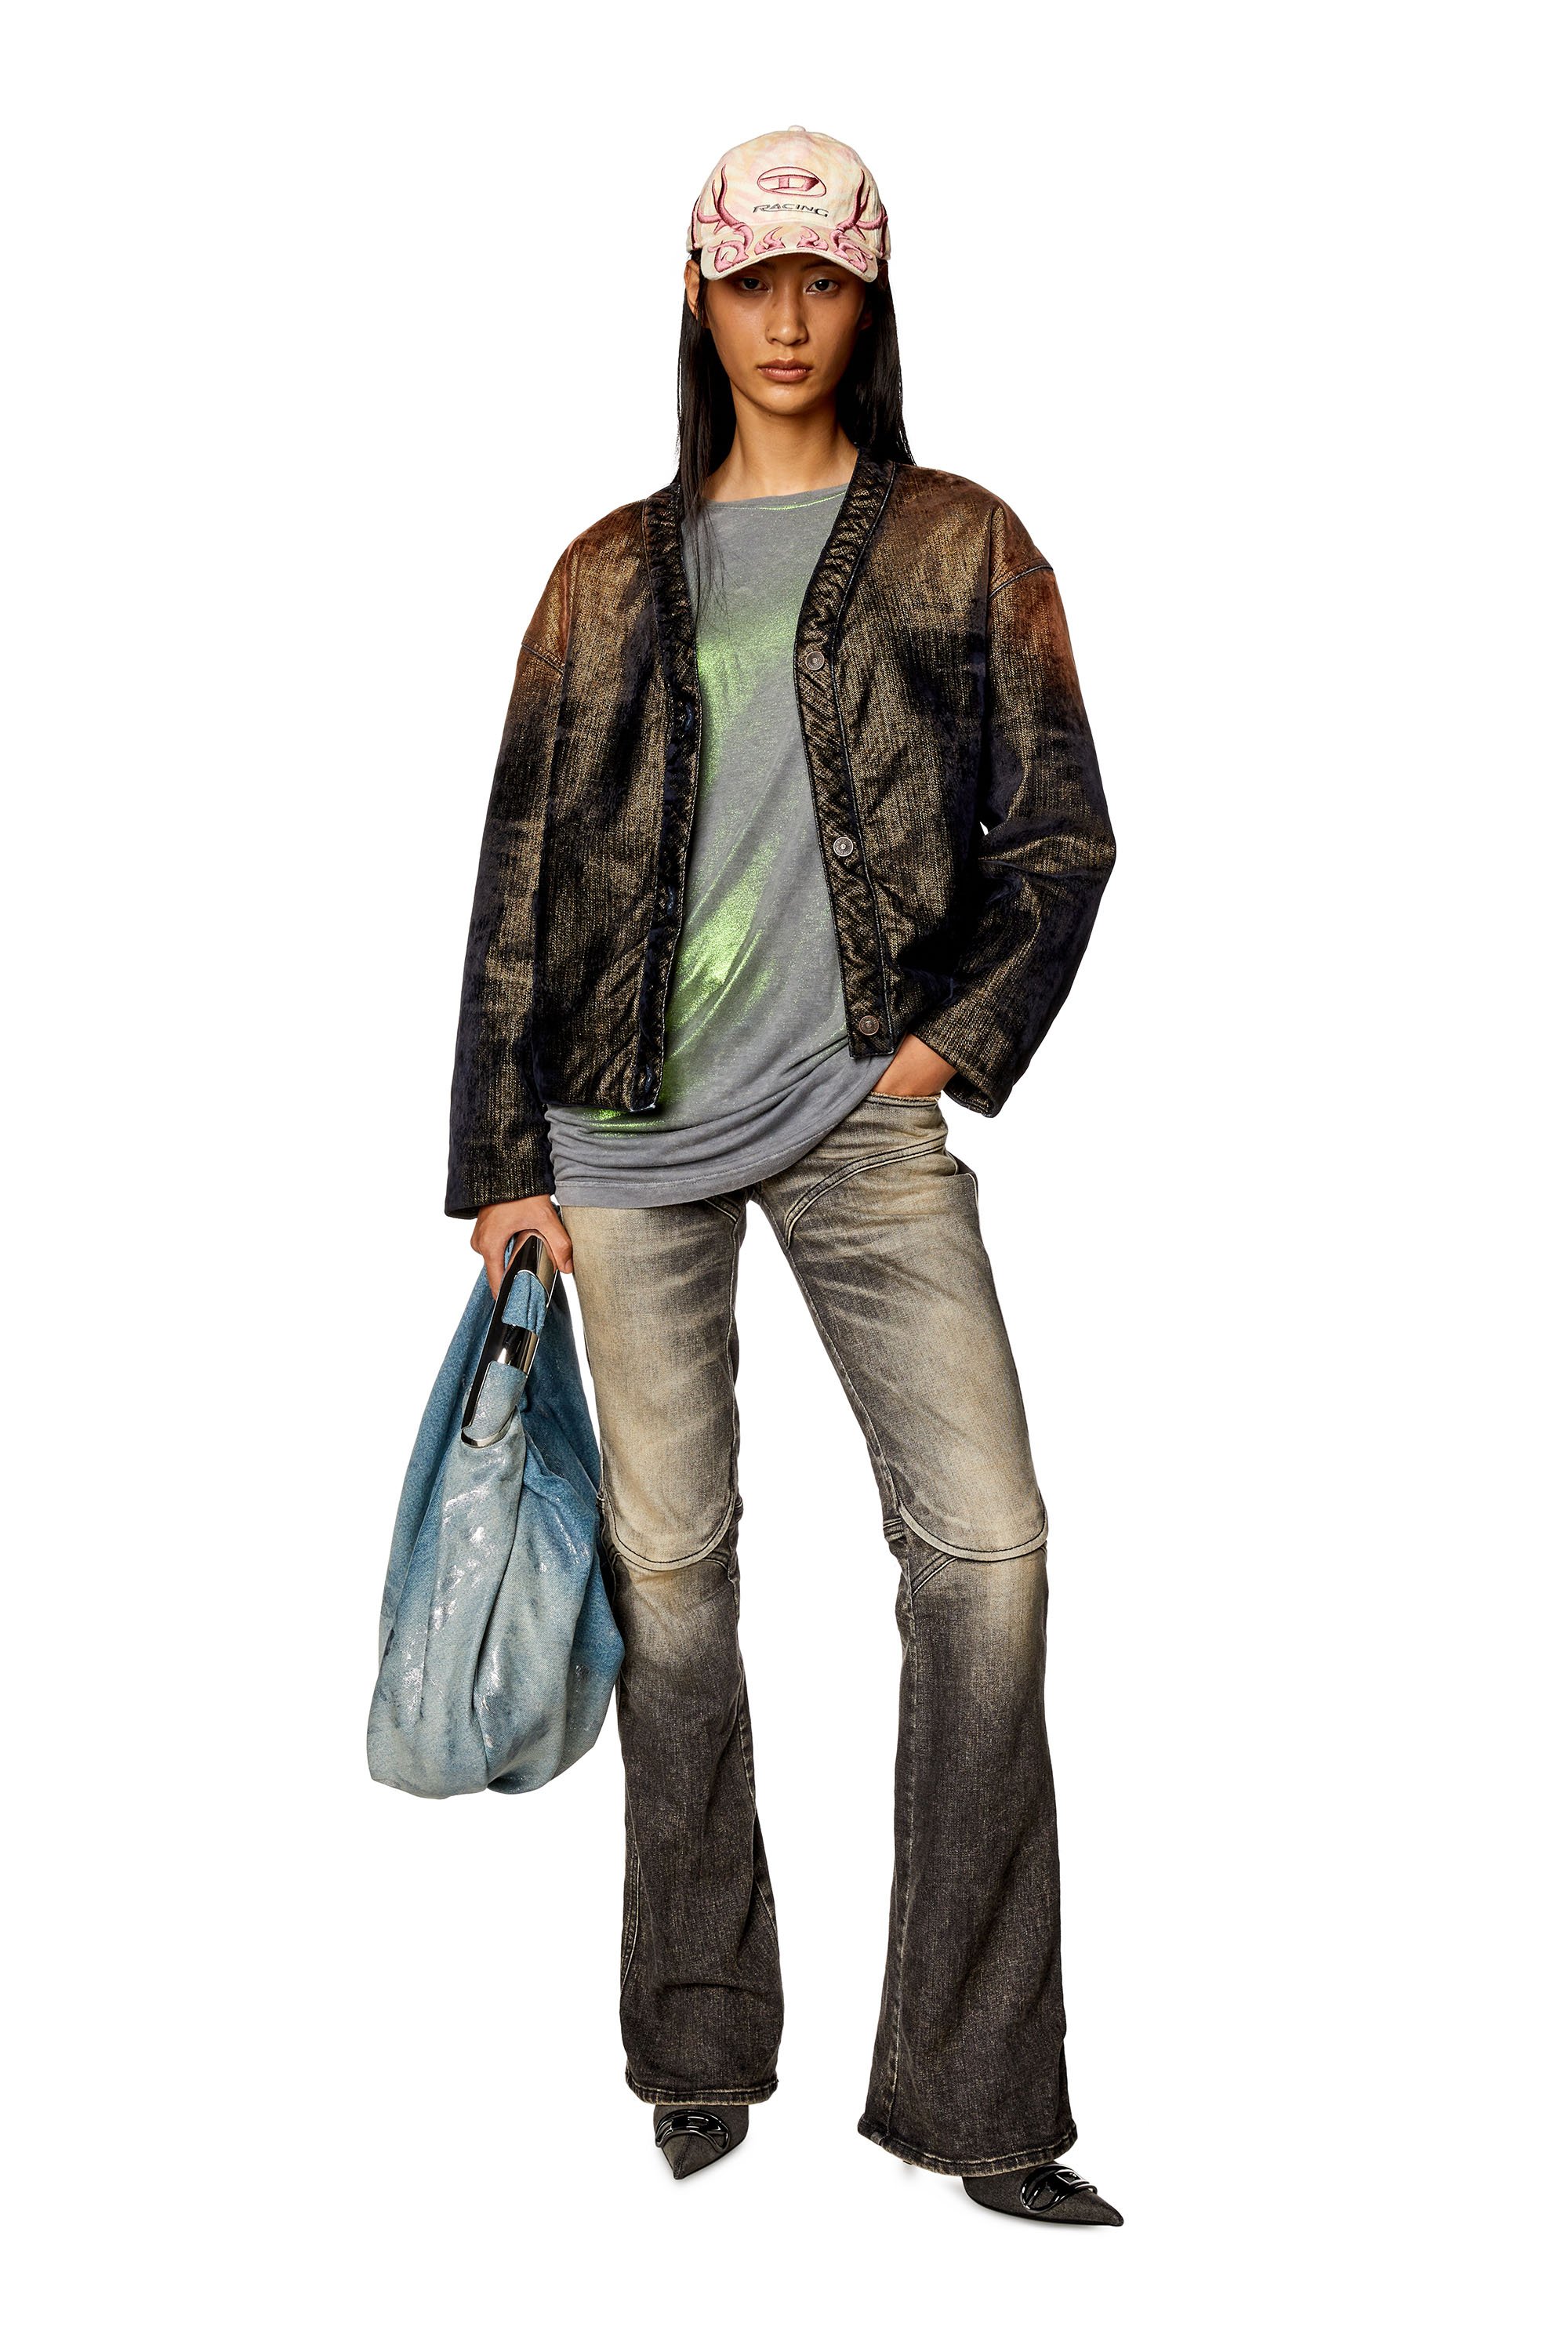 Diesel - DE-CONF-S, Woman Jacket in shimmery denim in Multicolor - Image 2